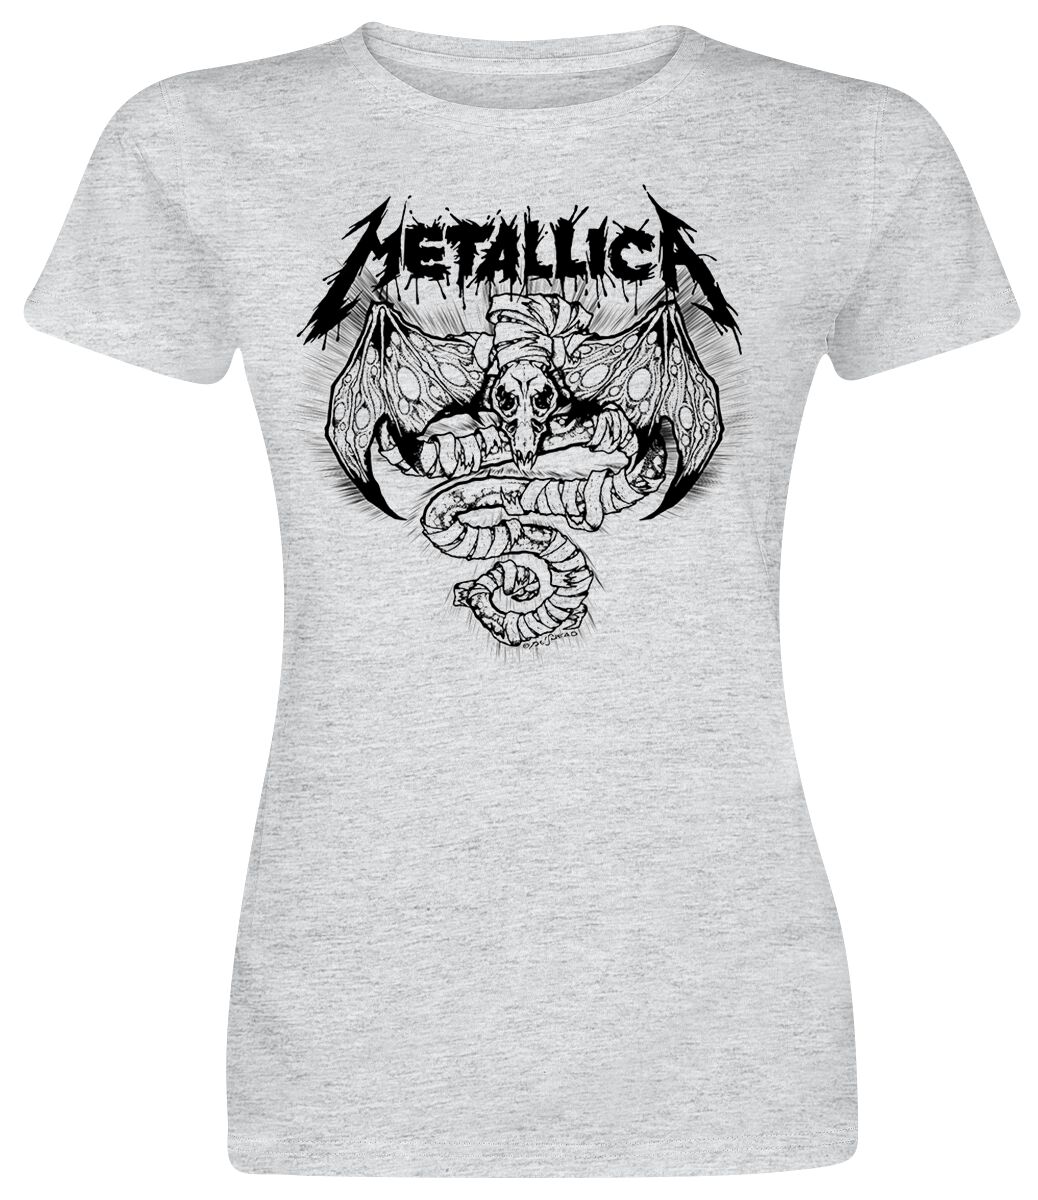 Metallica Roam Blast T-Shirt mottled grey